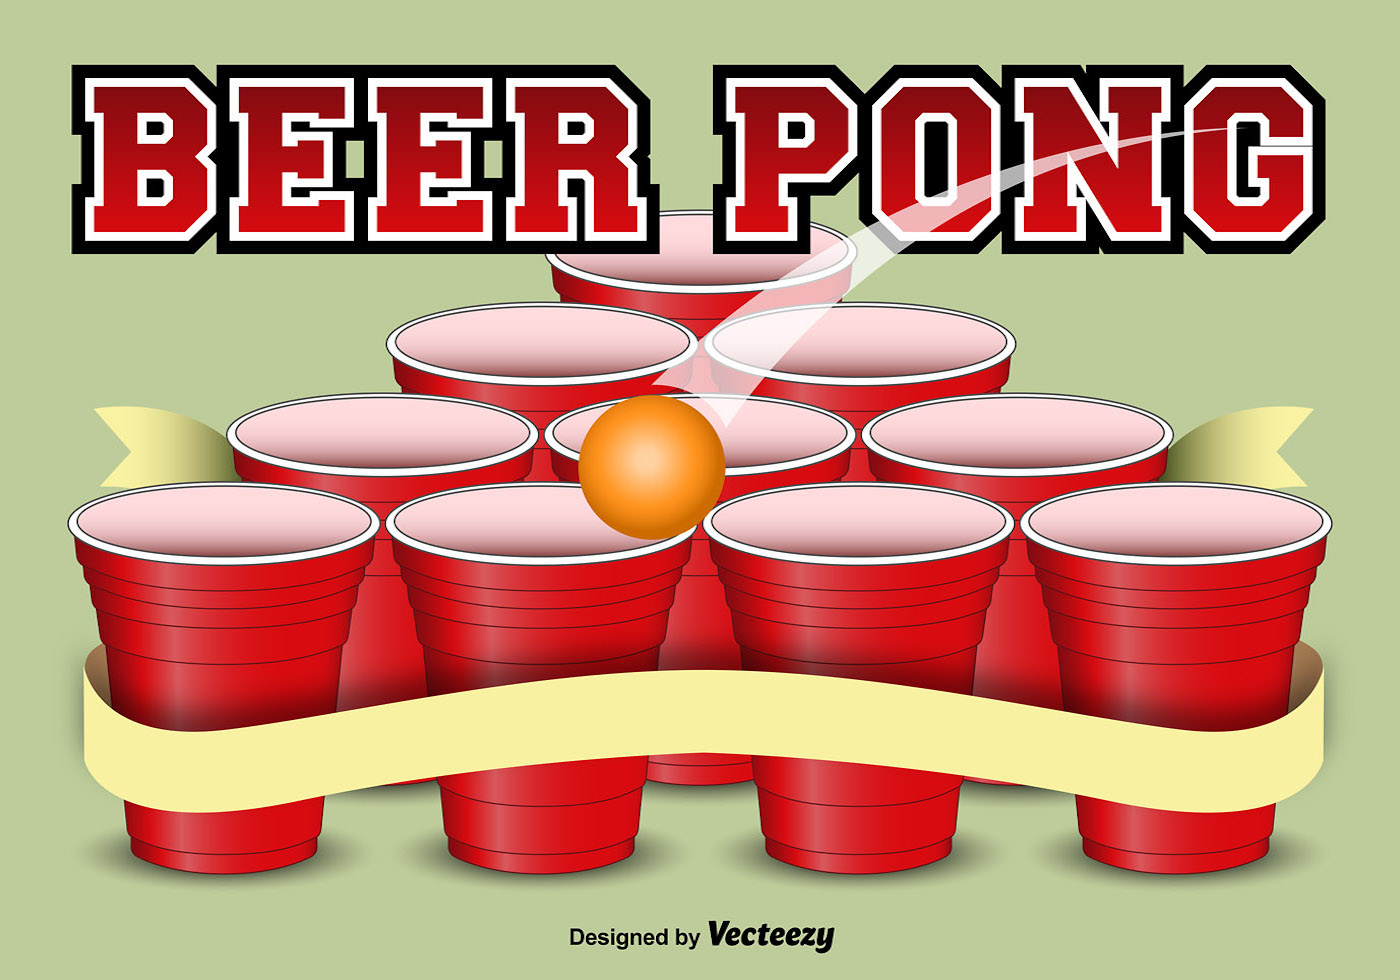 Beer pong template background - Download Free Vector Art ...